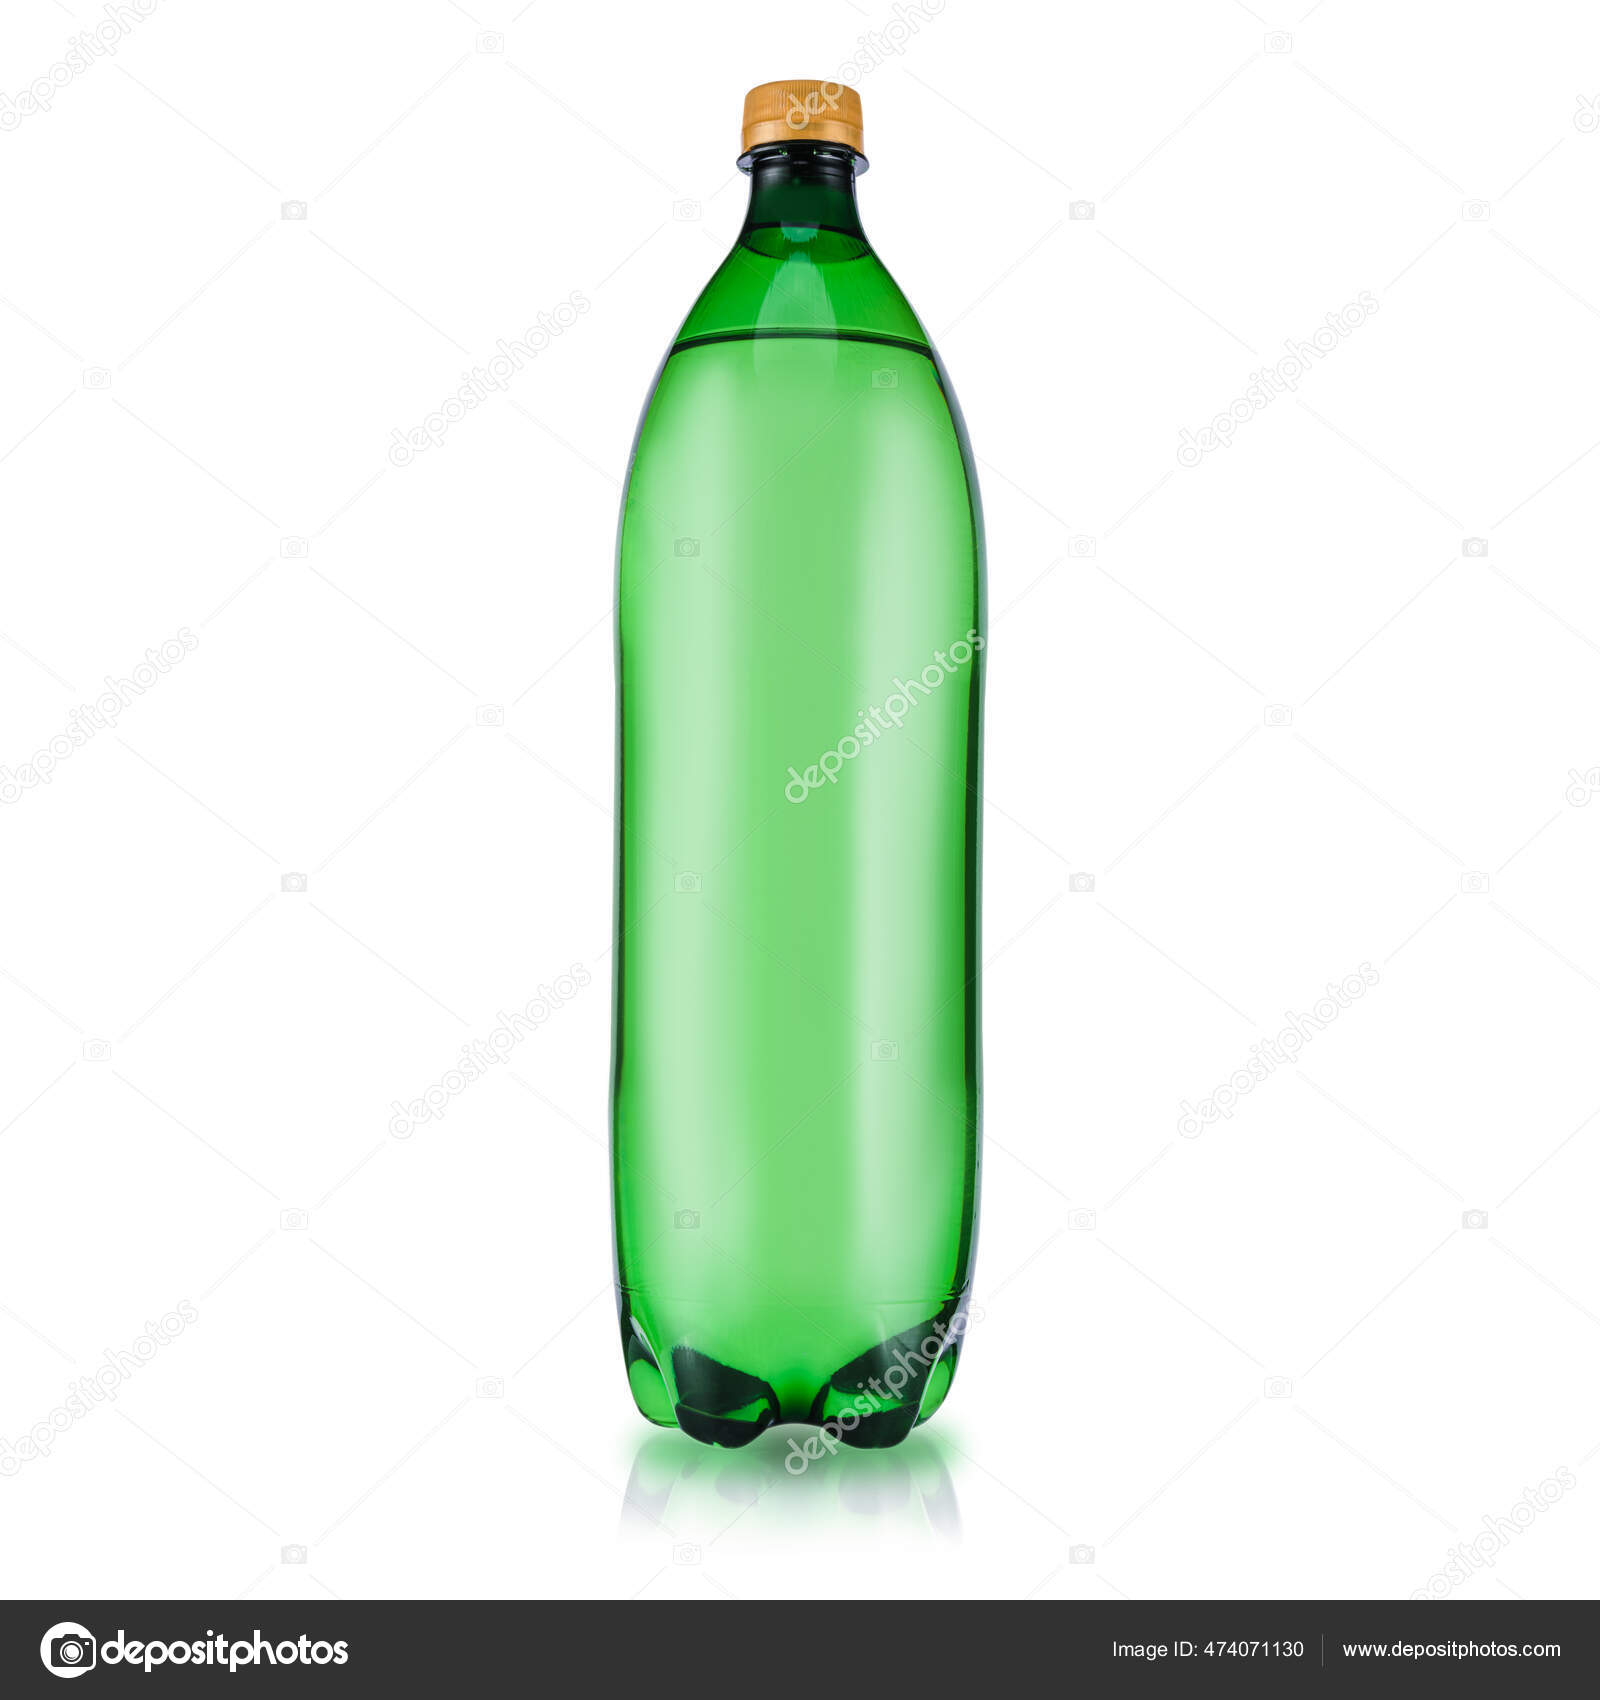 https://st2.depositphotos.com/1051355/47407/i/1600/depositphotos_474071130-stock-photo-plastic-green-bottle-purified-water.jpg